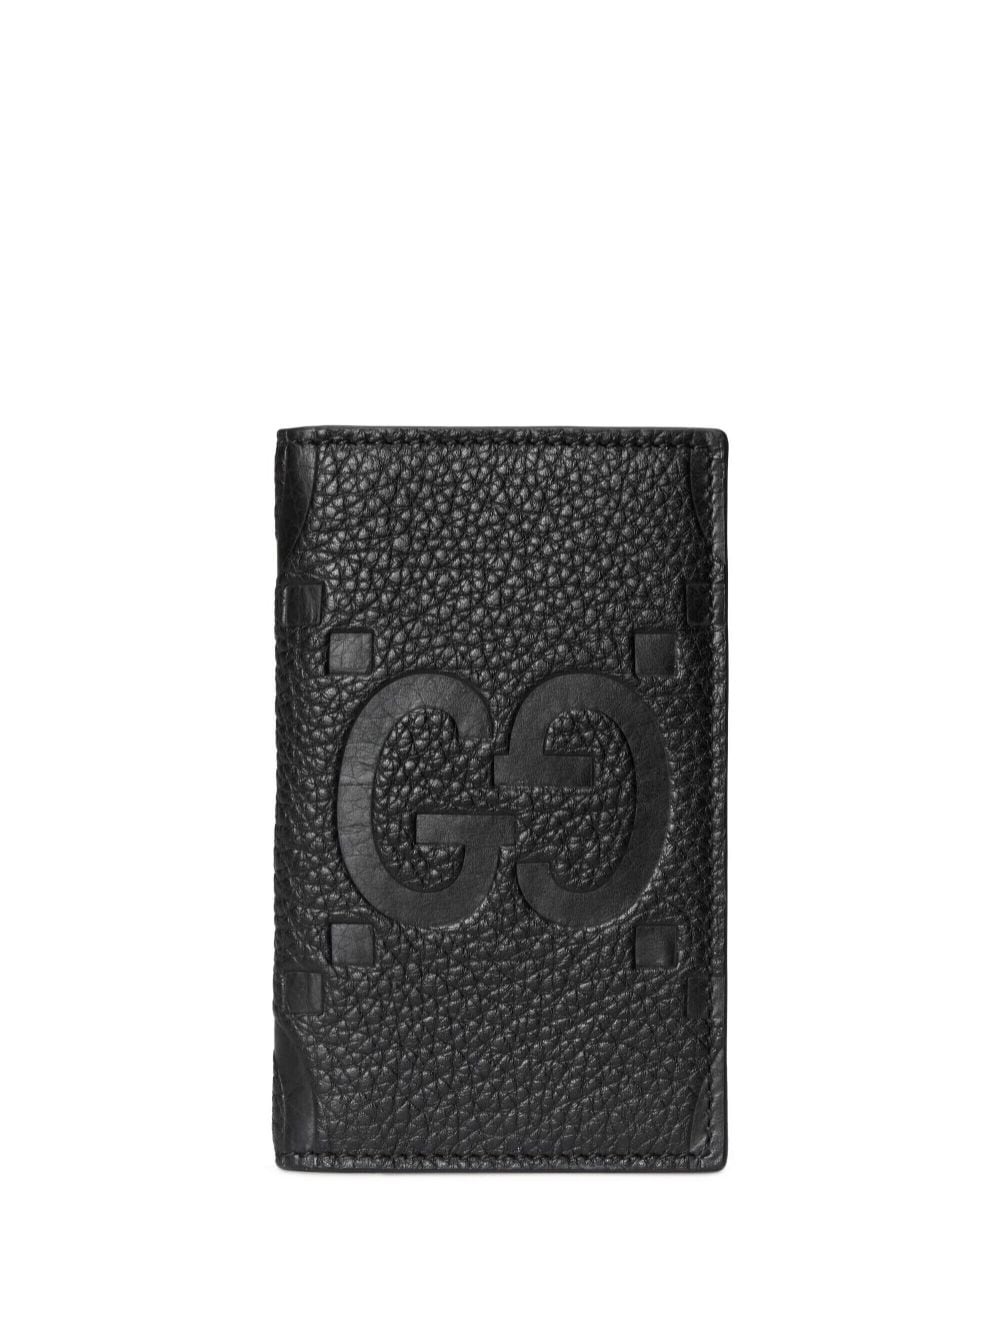 Jumbo GG leather cardholder - 1